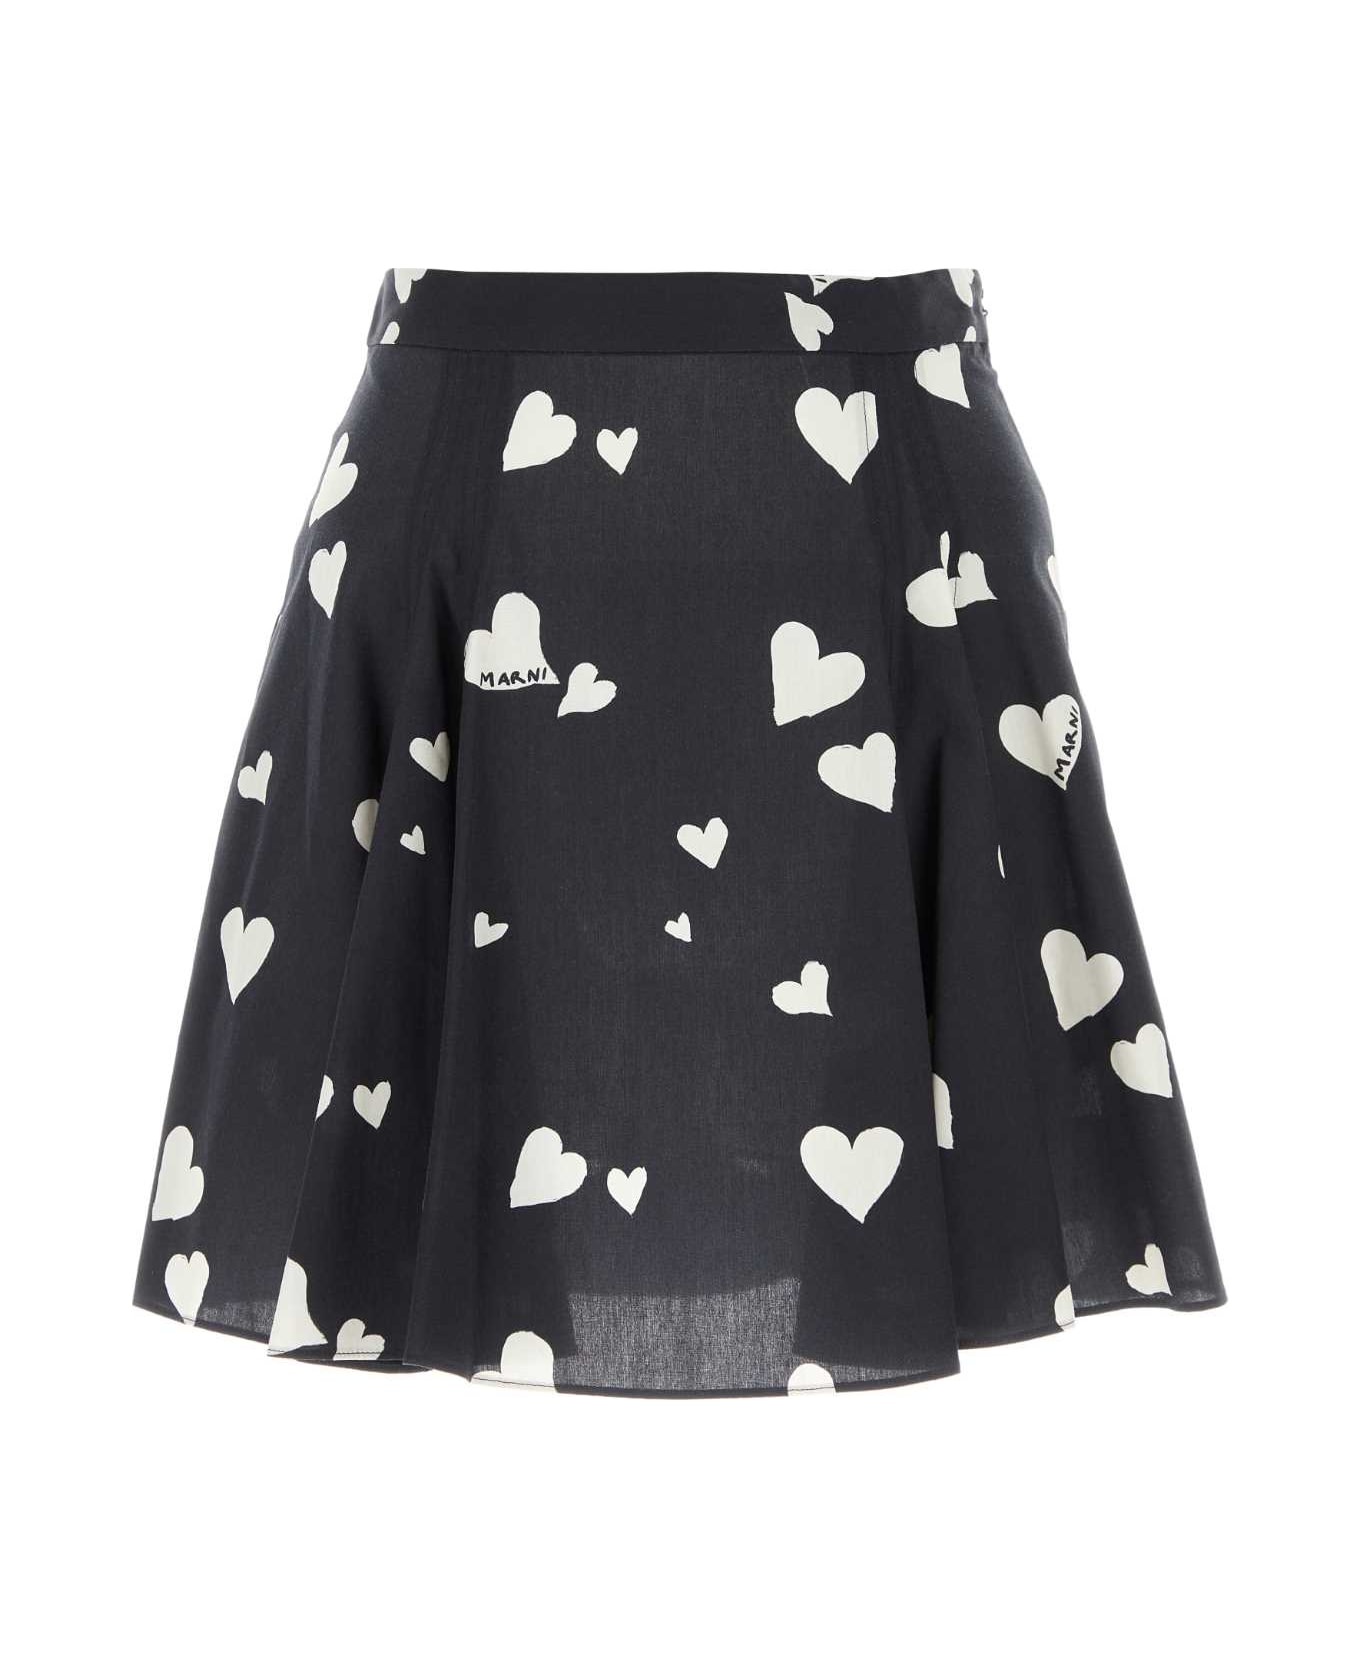 Marni Printed Cotton Mini Skirt - BLACK